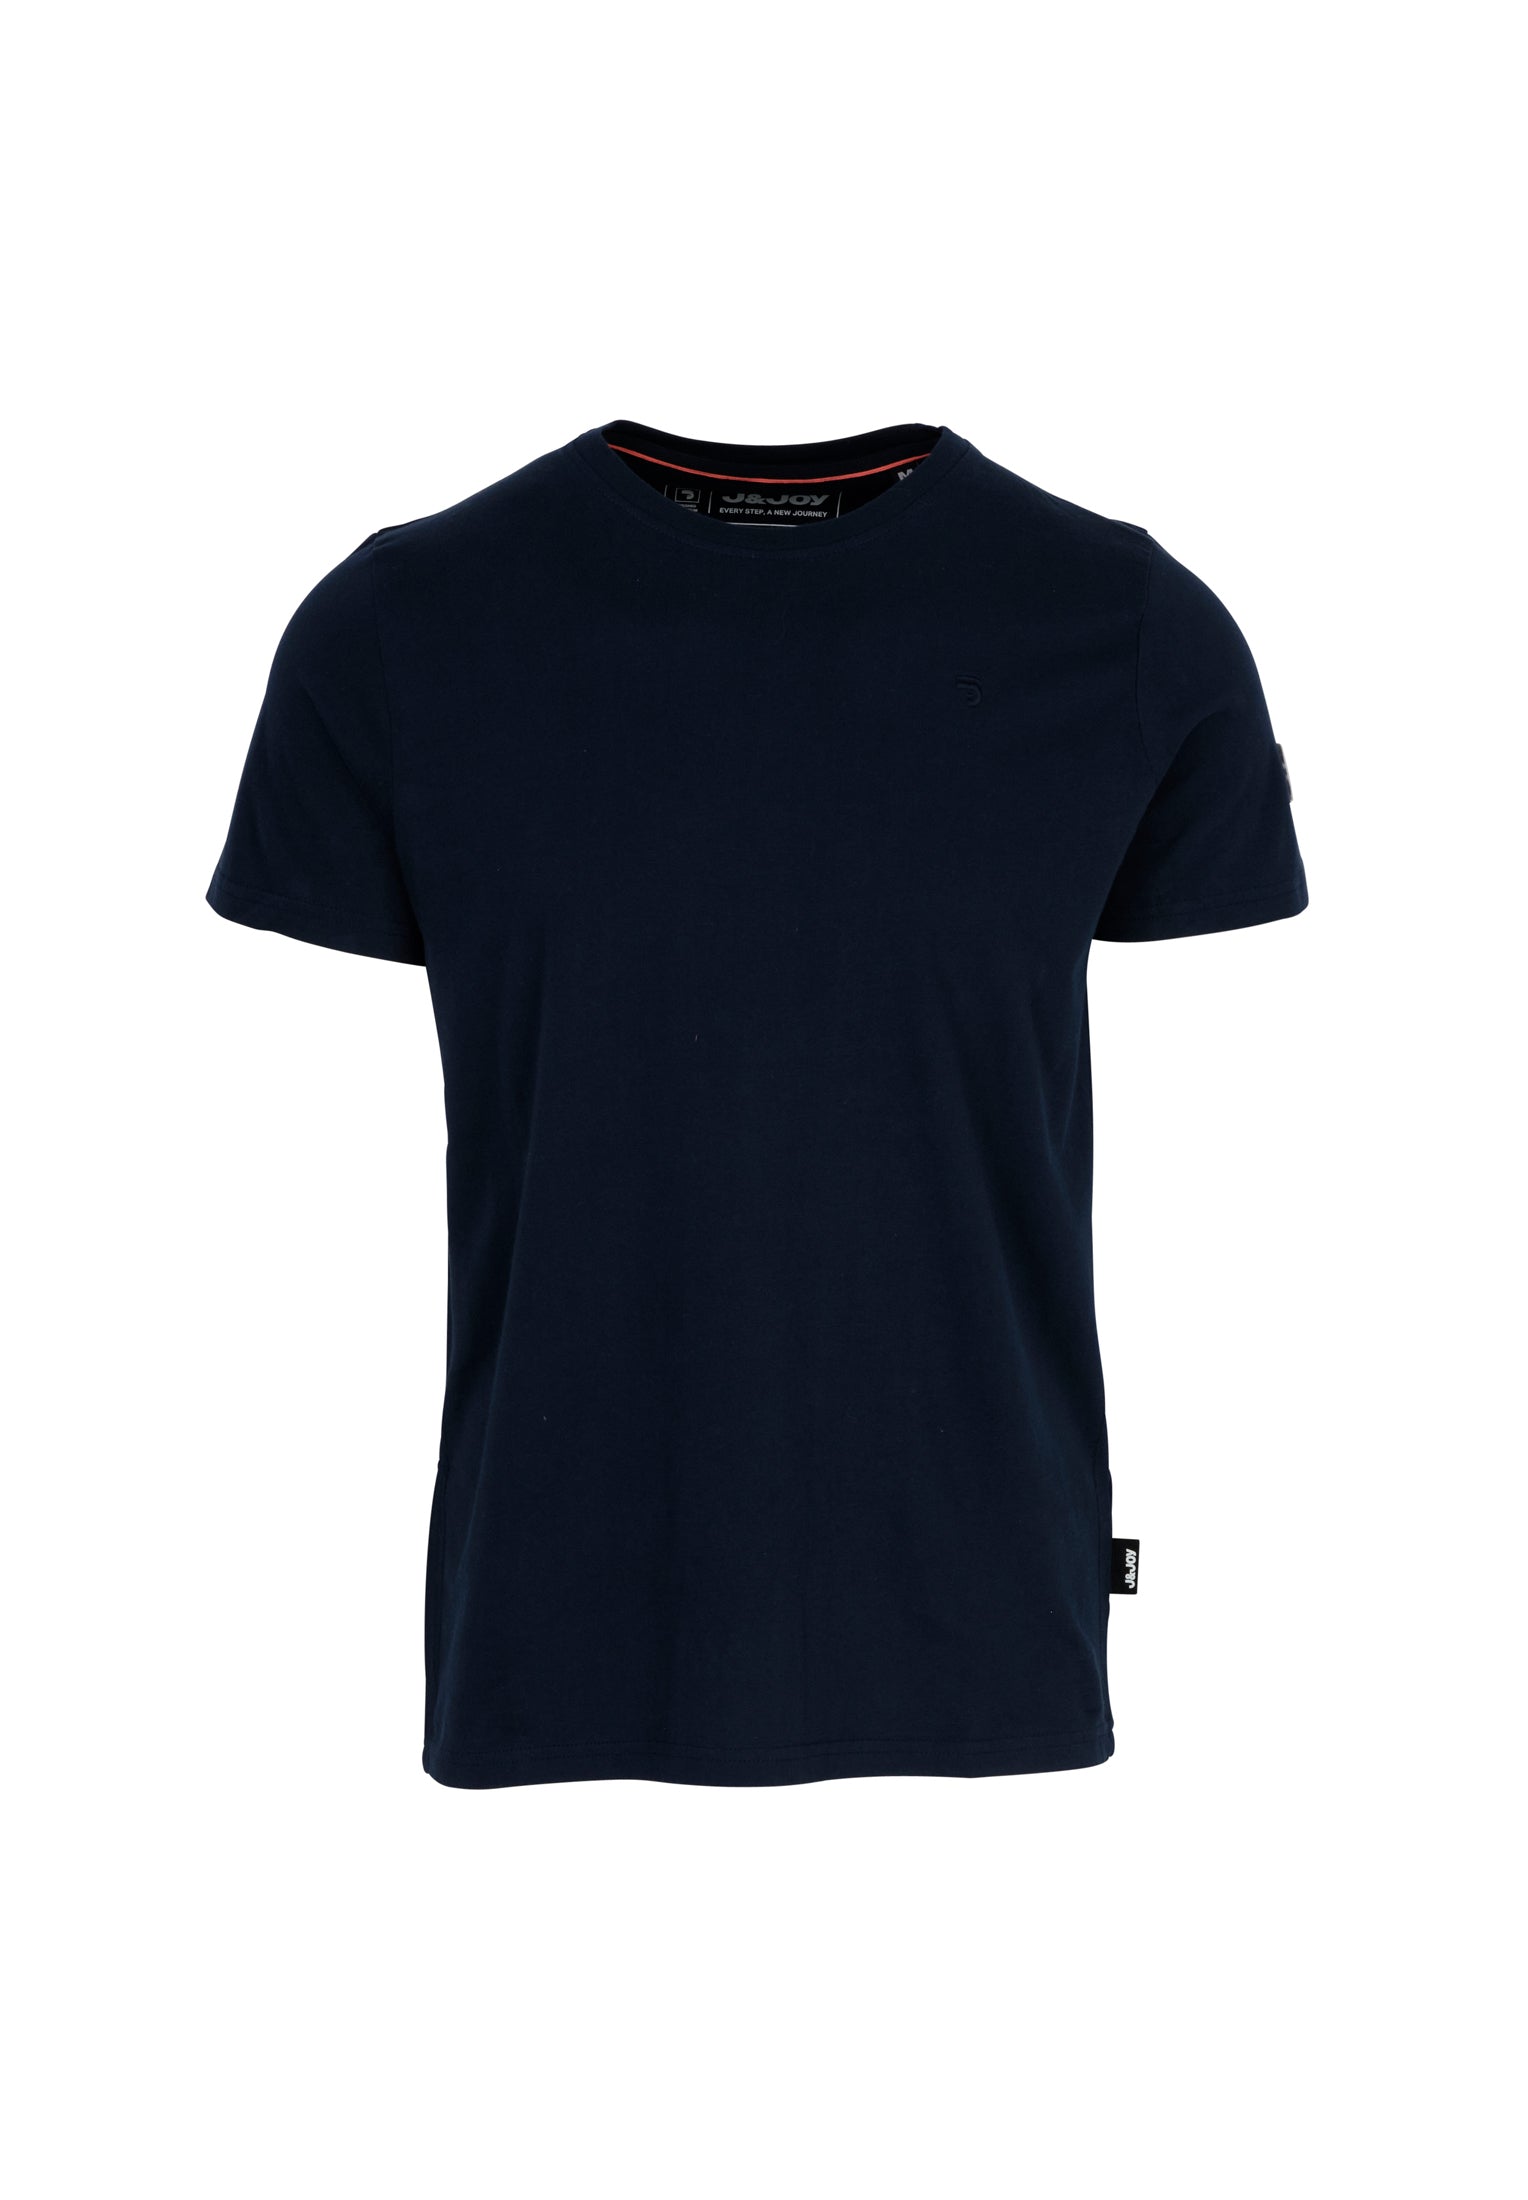 T-Shirt Homme Essentials 02 Navy Carbon | J&JOY.